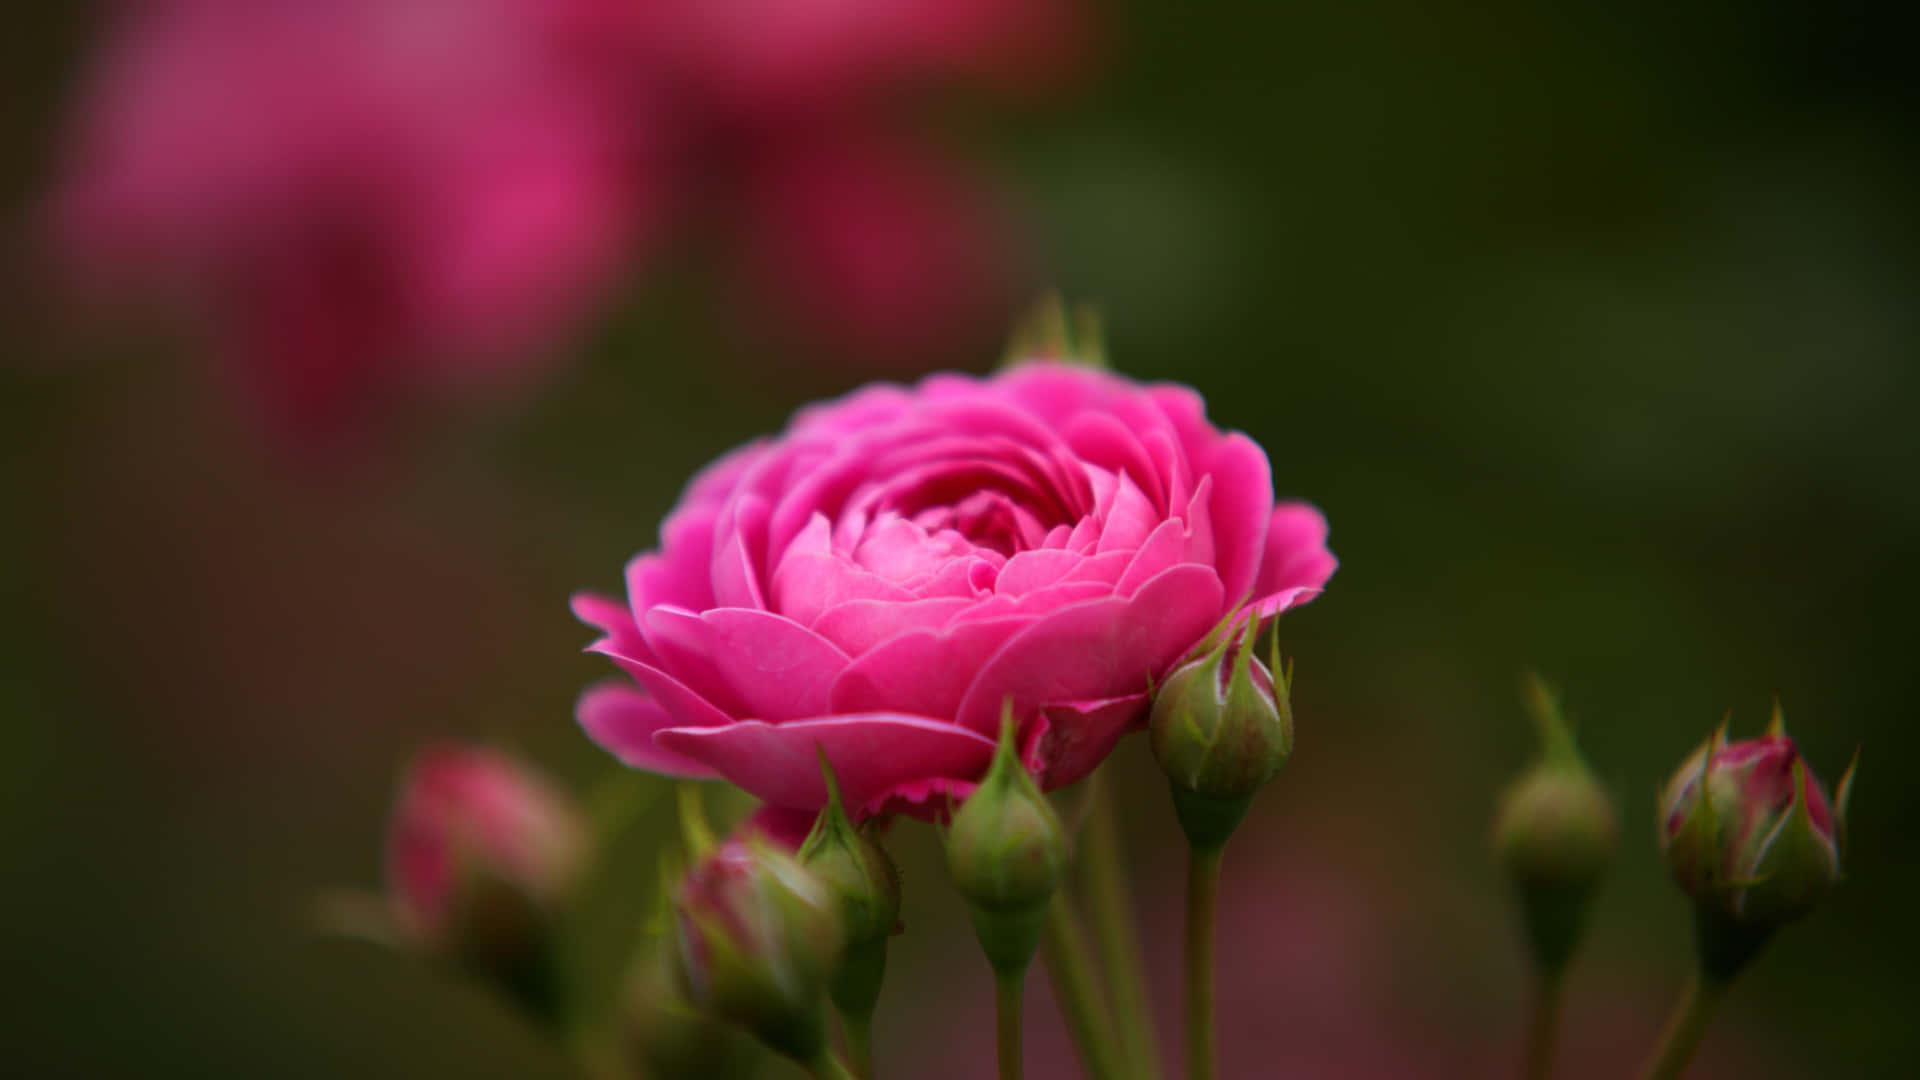 1440p Full Bloomed Pink Rose Background